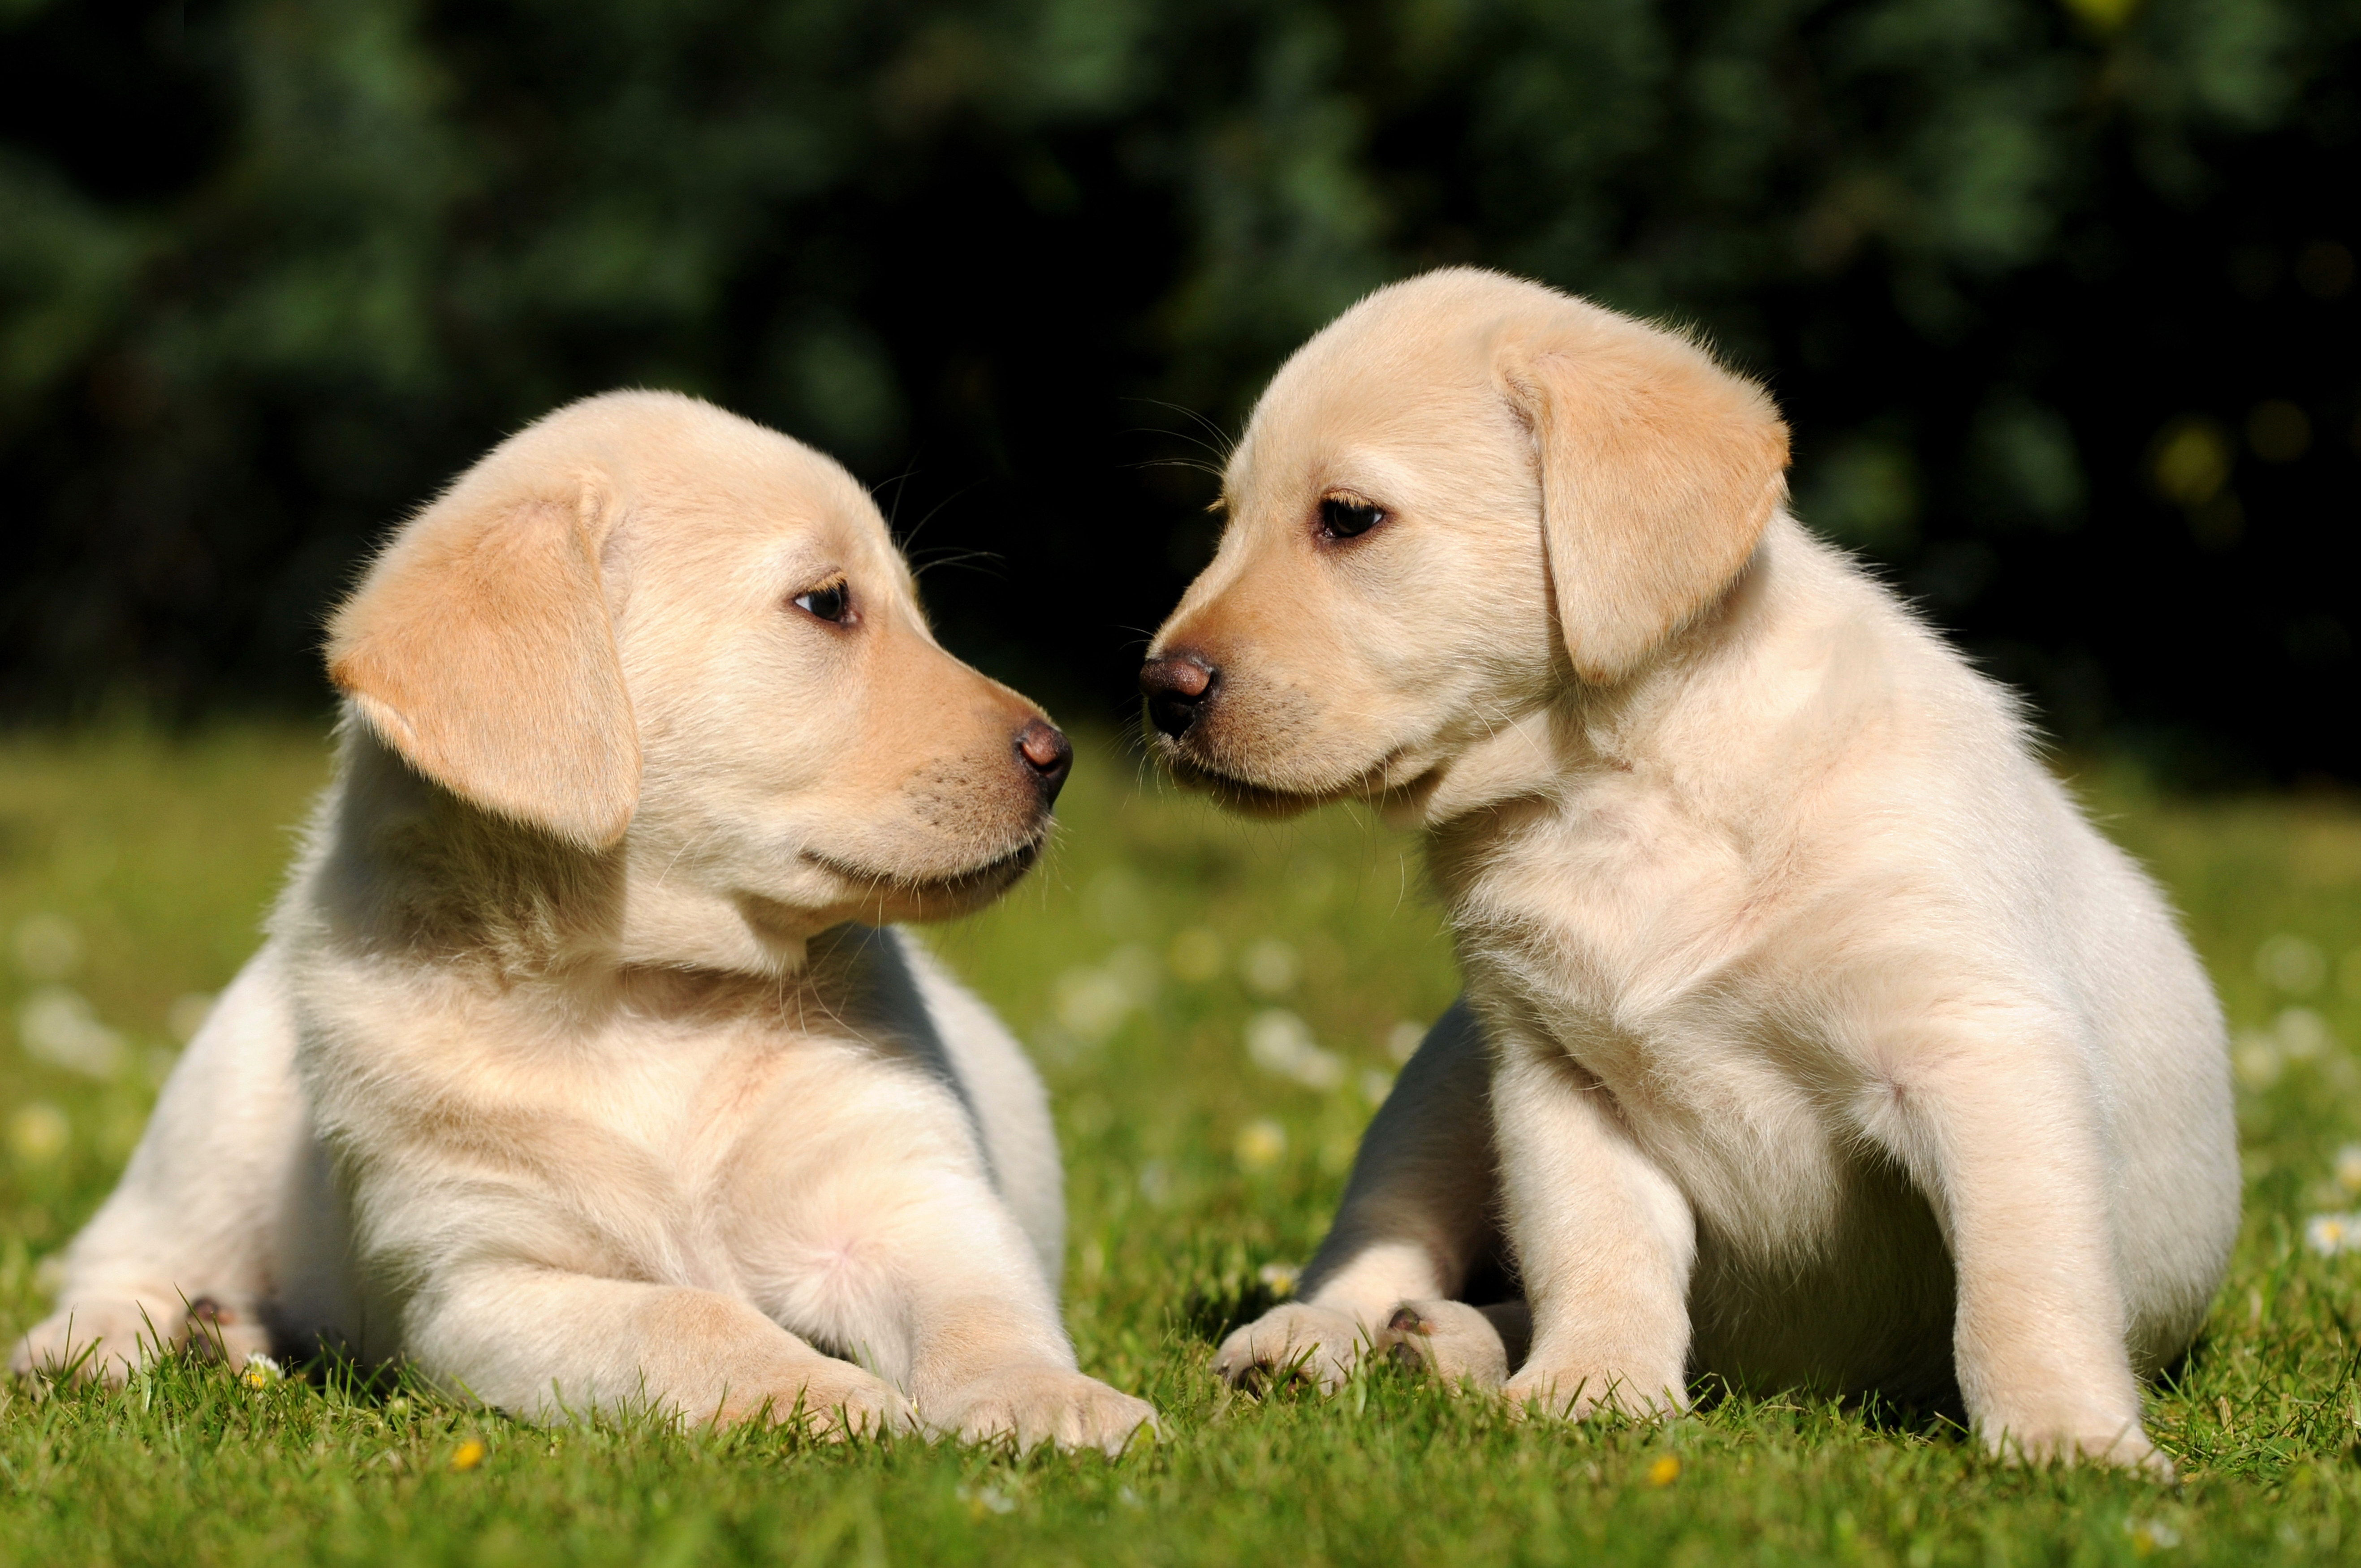 puppies, animals, grass, brothers